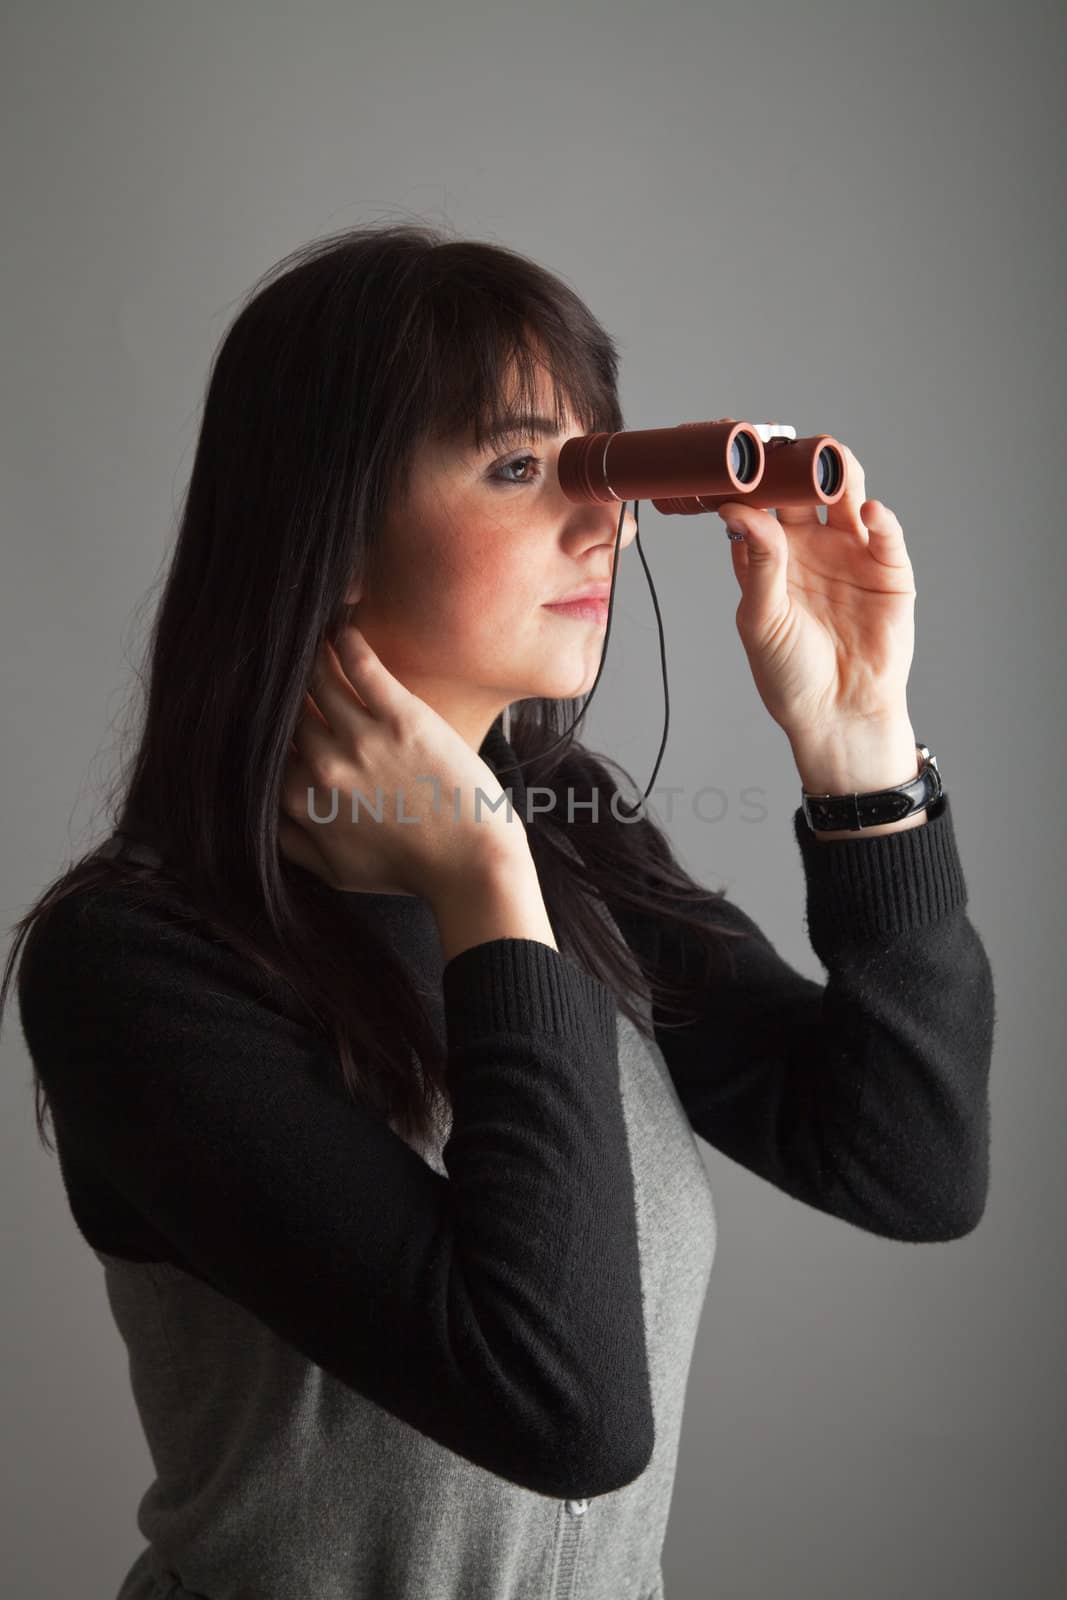 Front lit brunette woman looking via binoculars; gray background